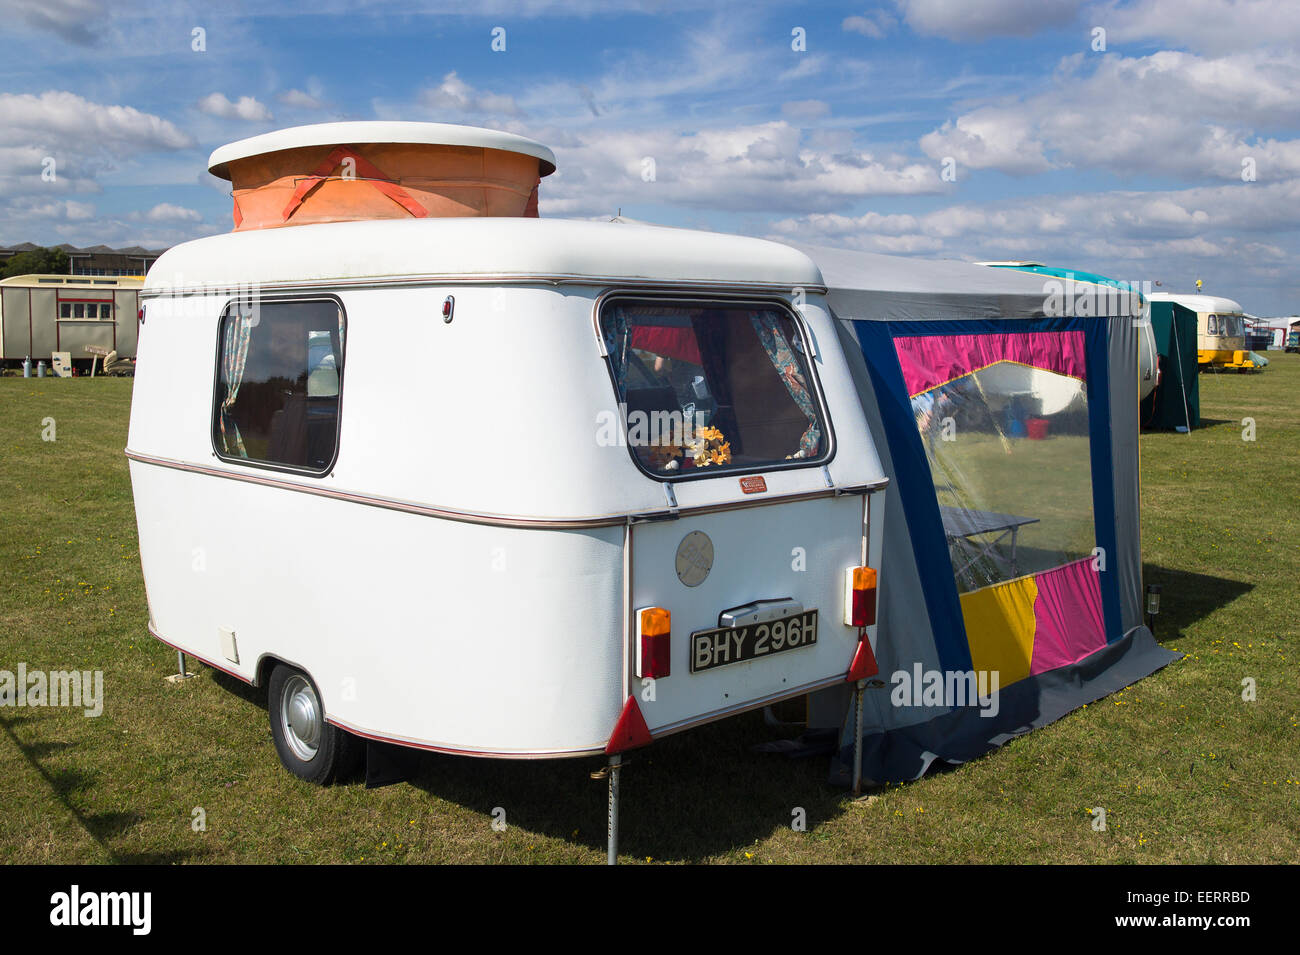 Mini caravan hi-res stock photography and images - Alamy